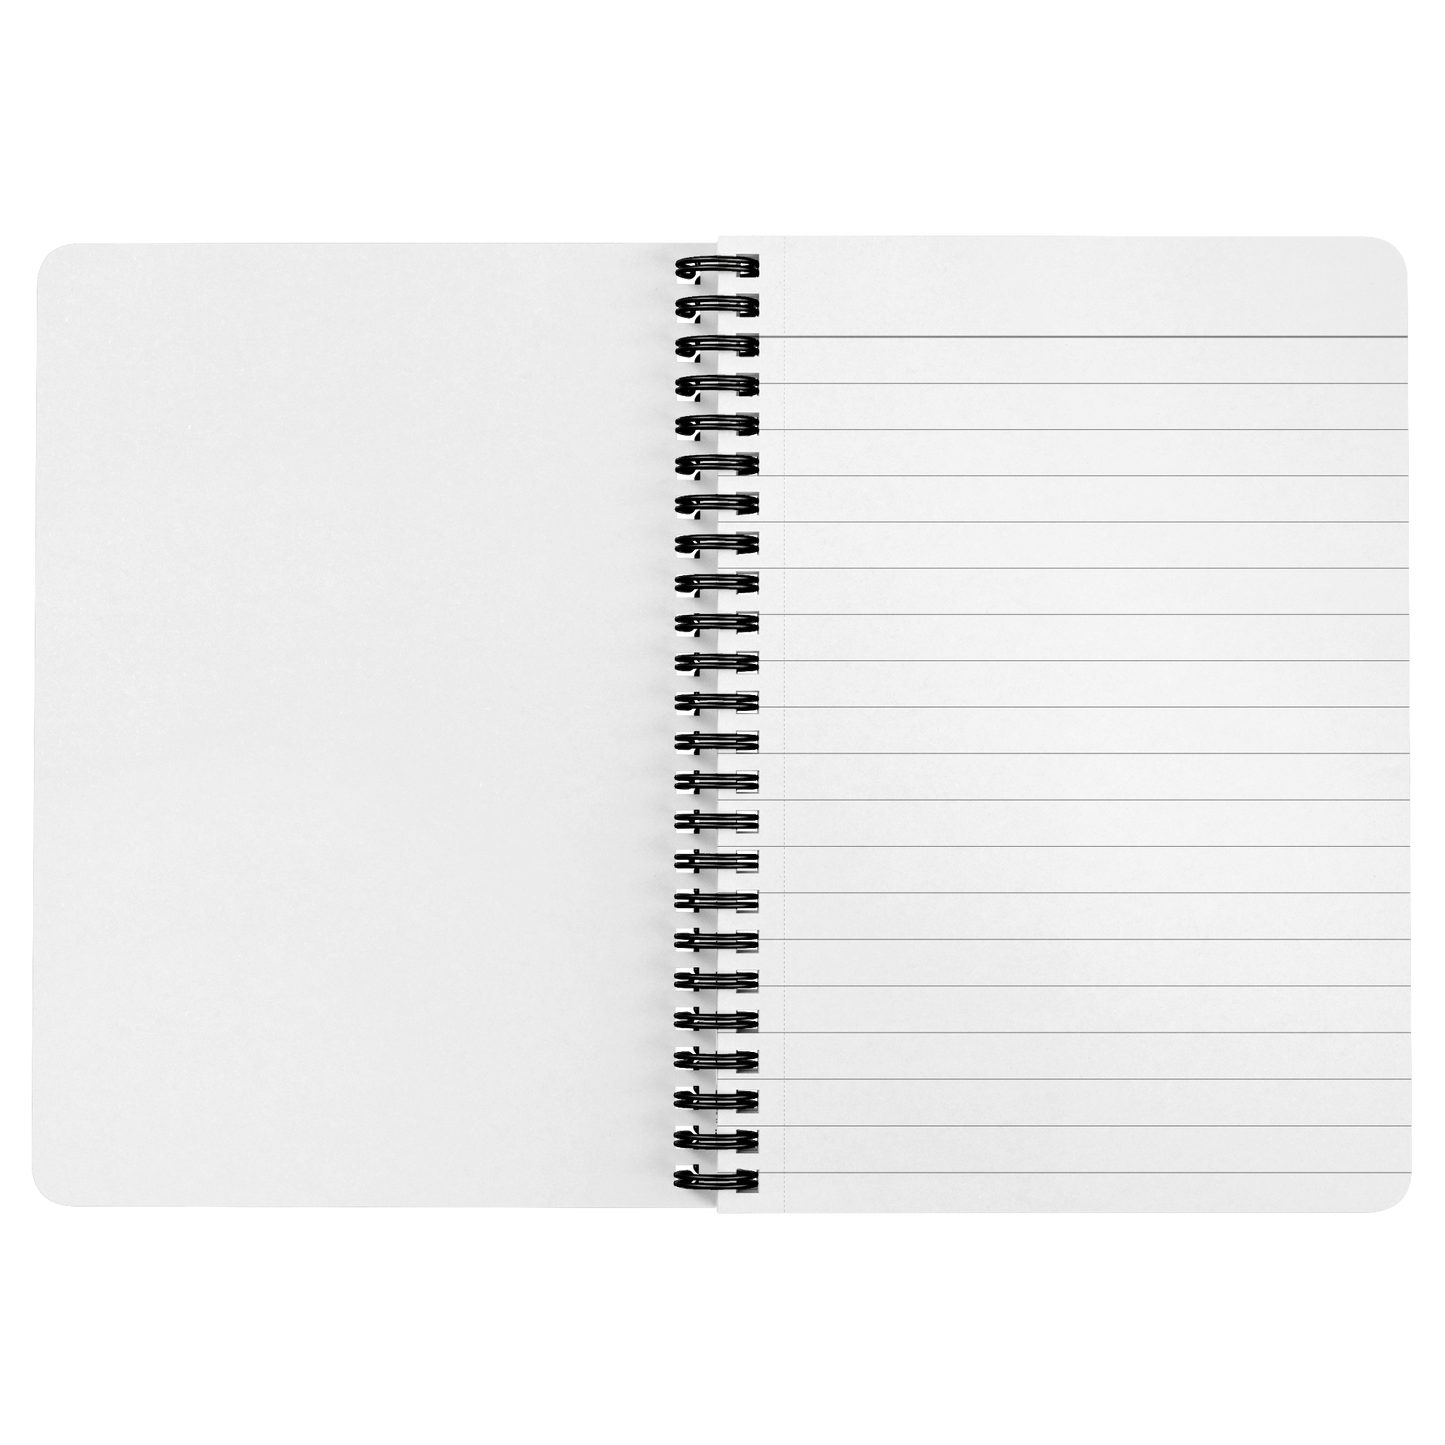 DST Bound Together Notebook/Journal